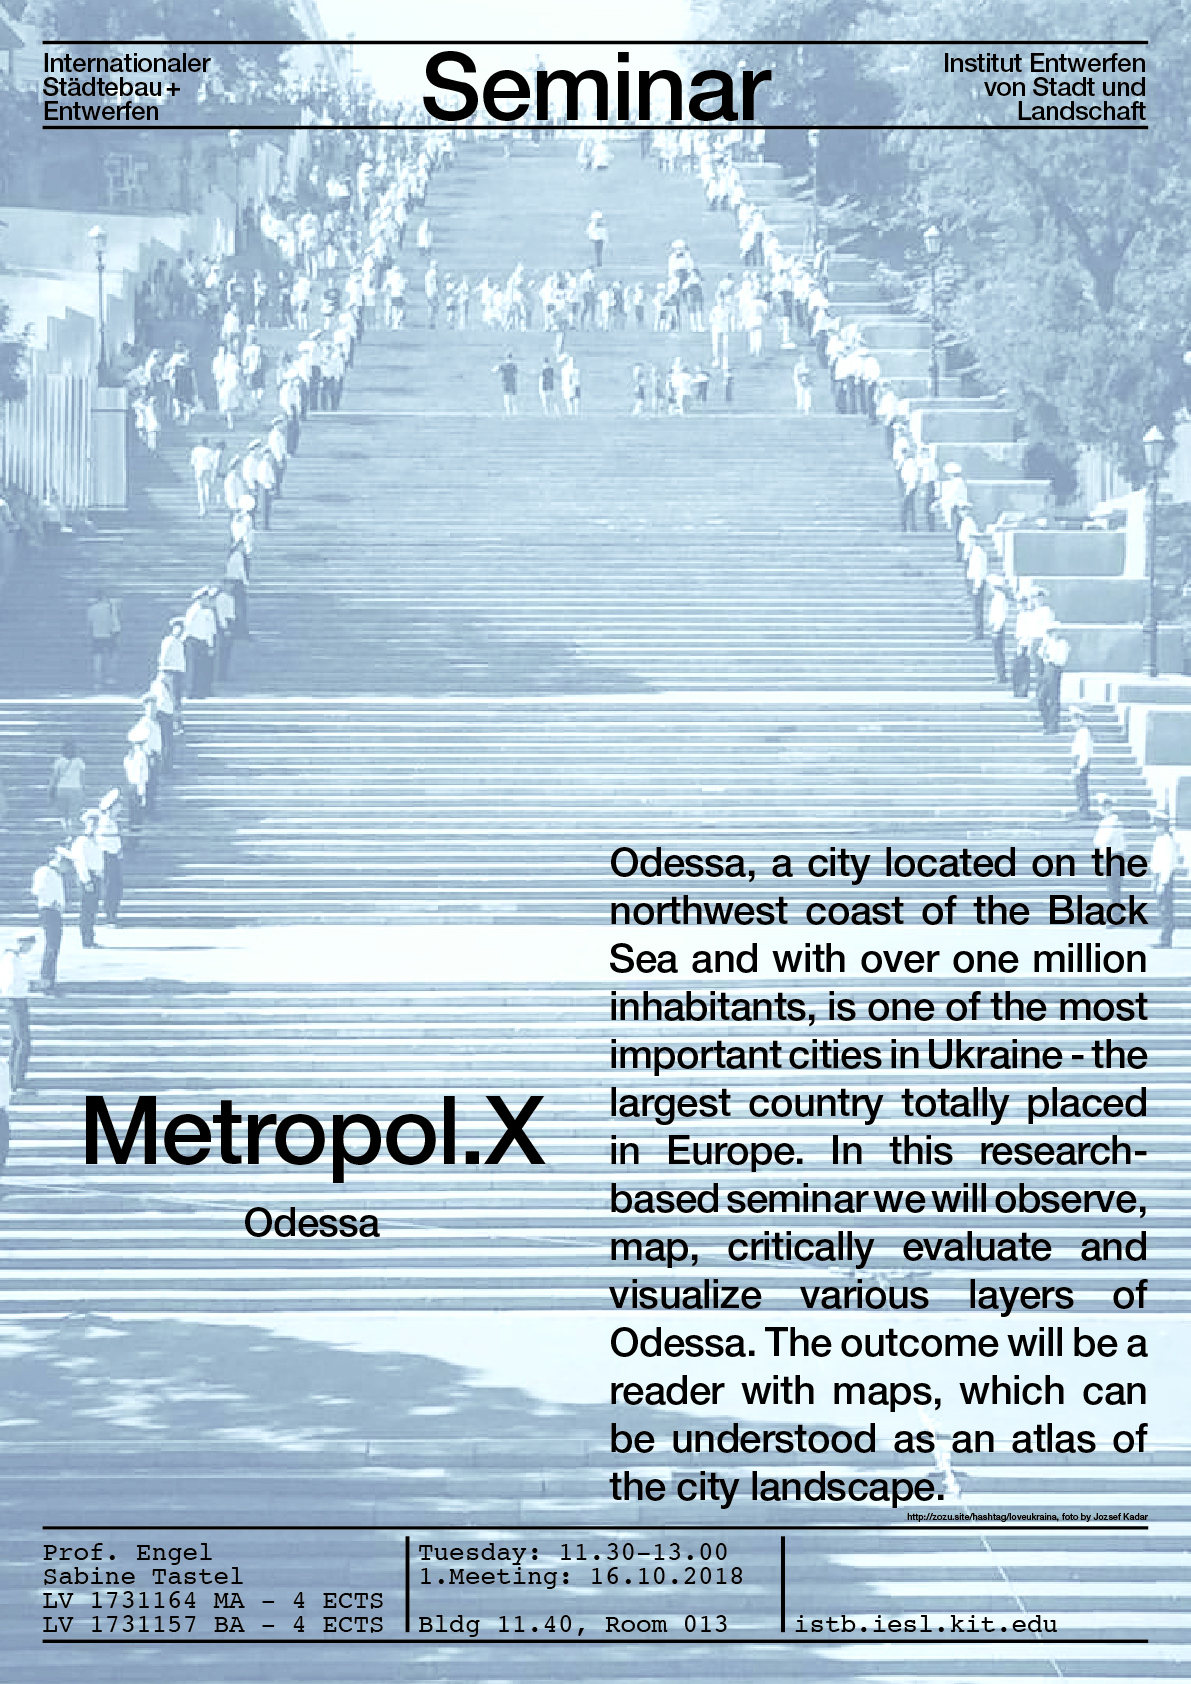 Seminar: Metropol.X - Odessa